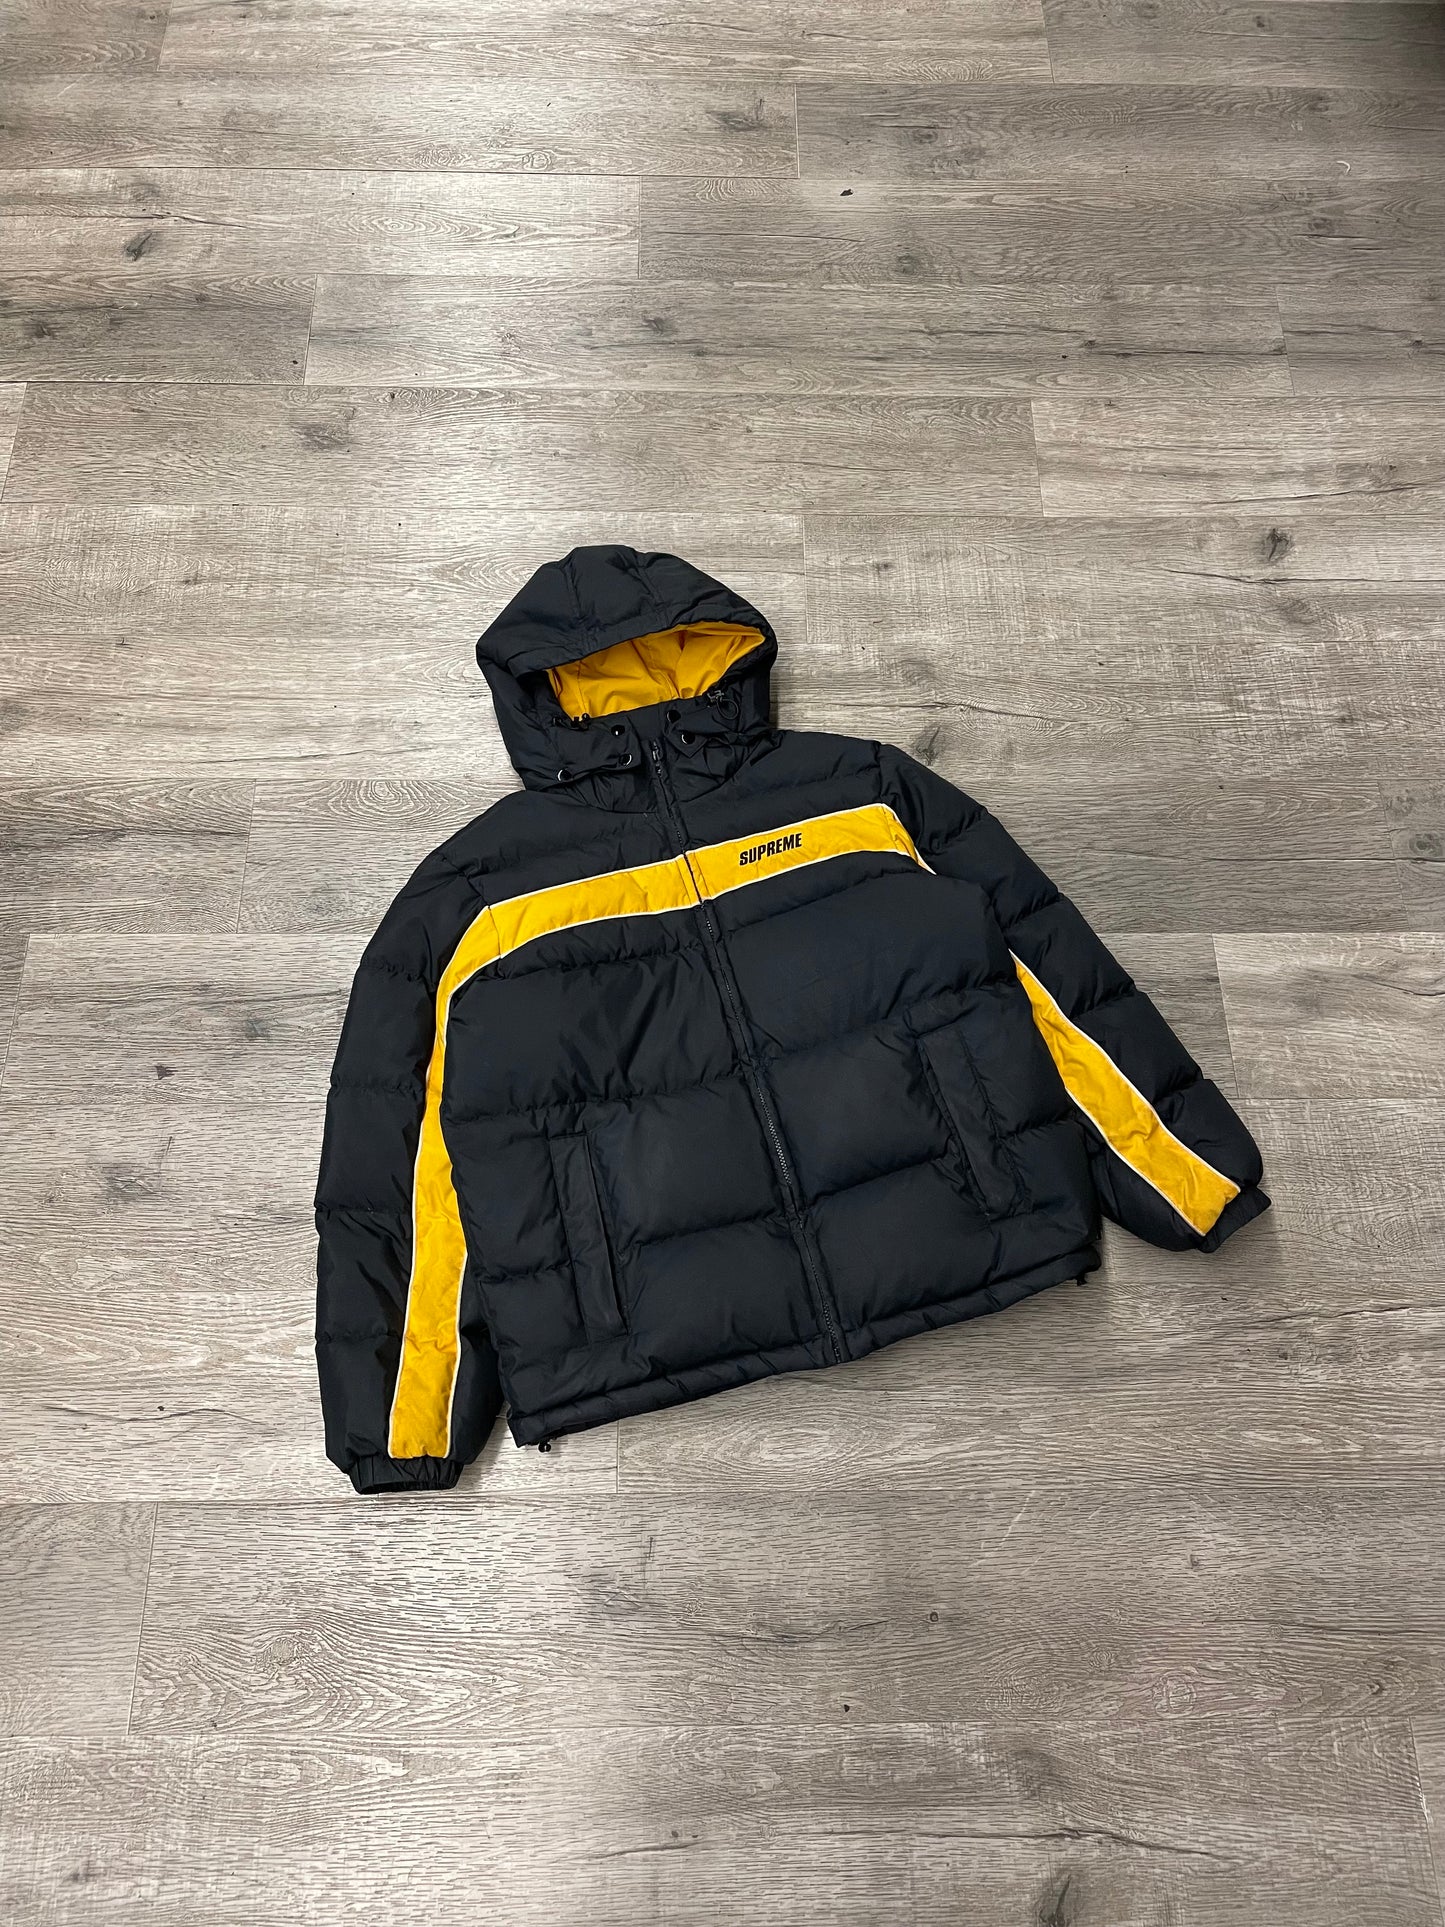 Supreme Black/Yellow Puffer Jacket